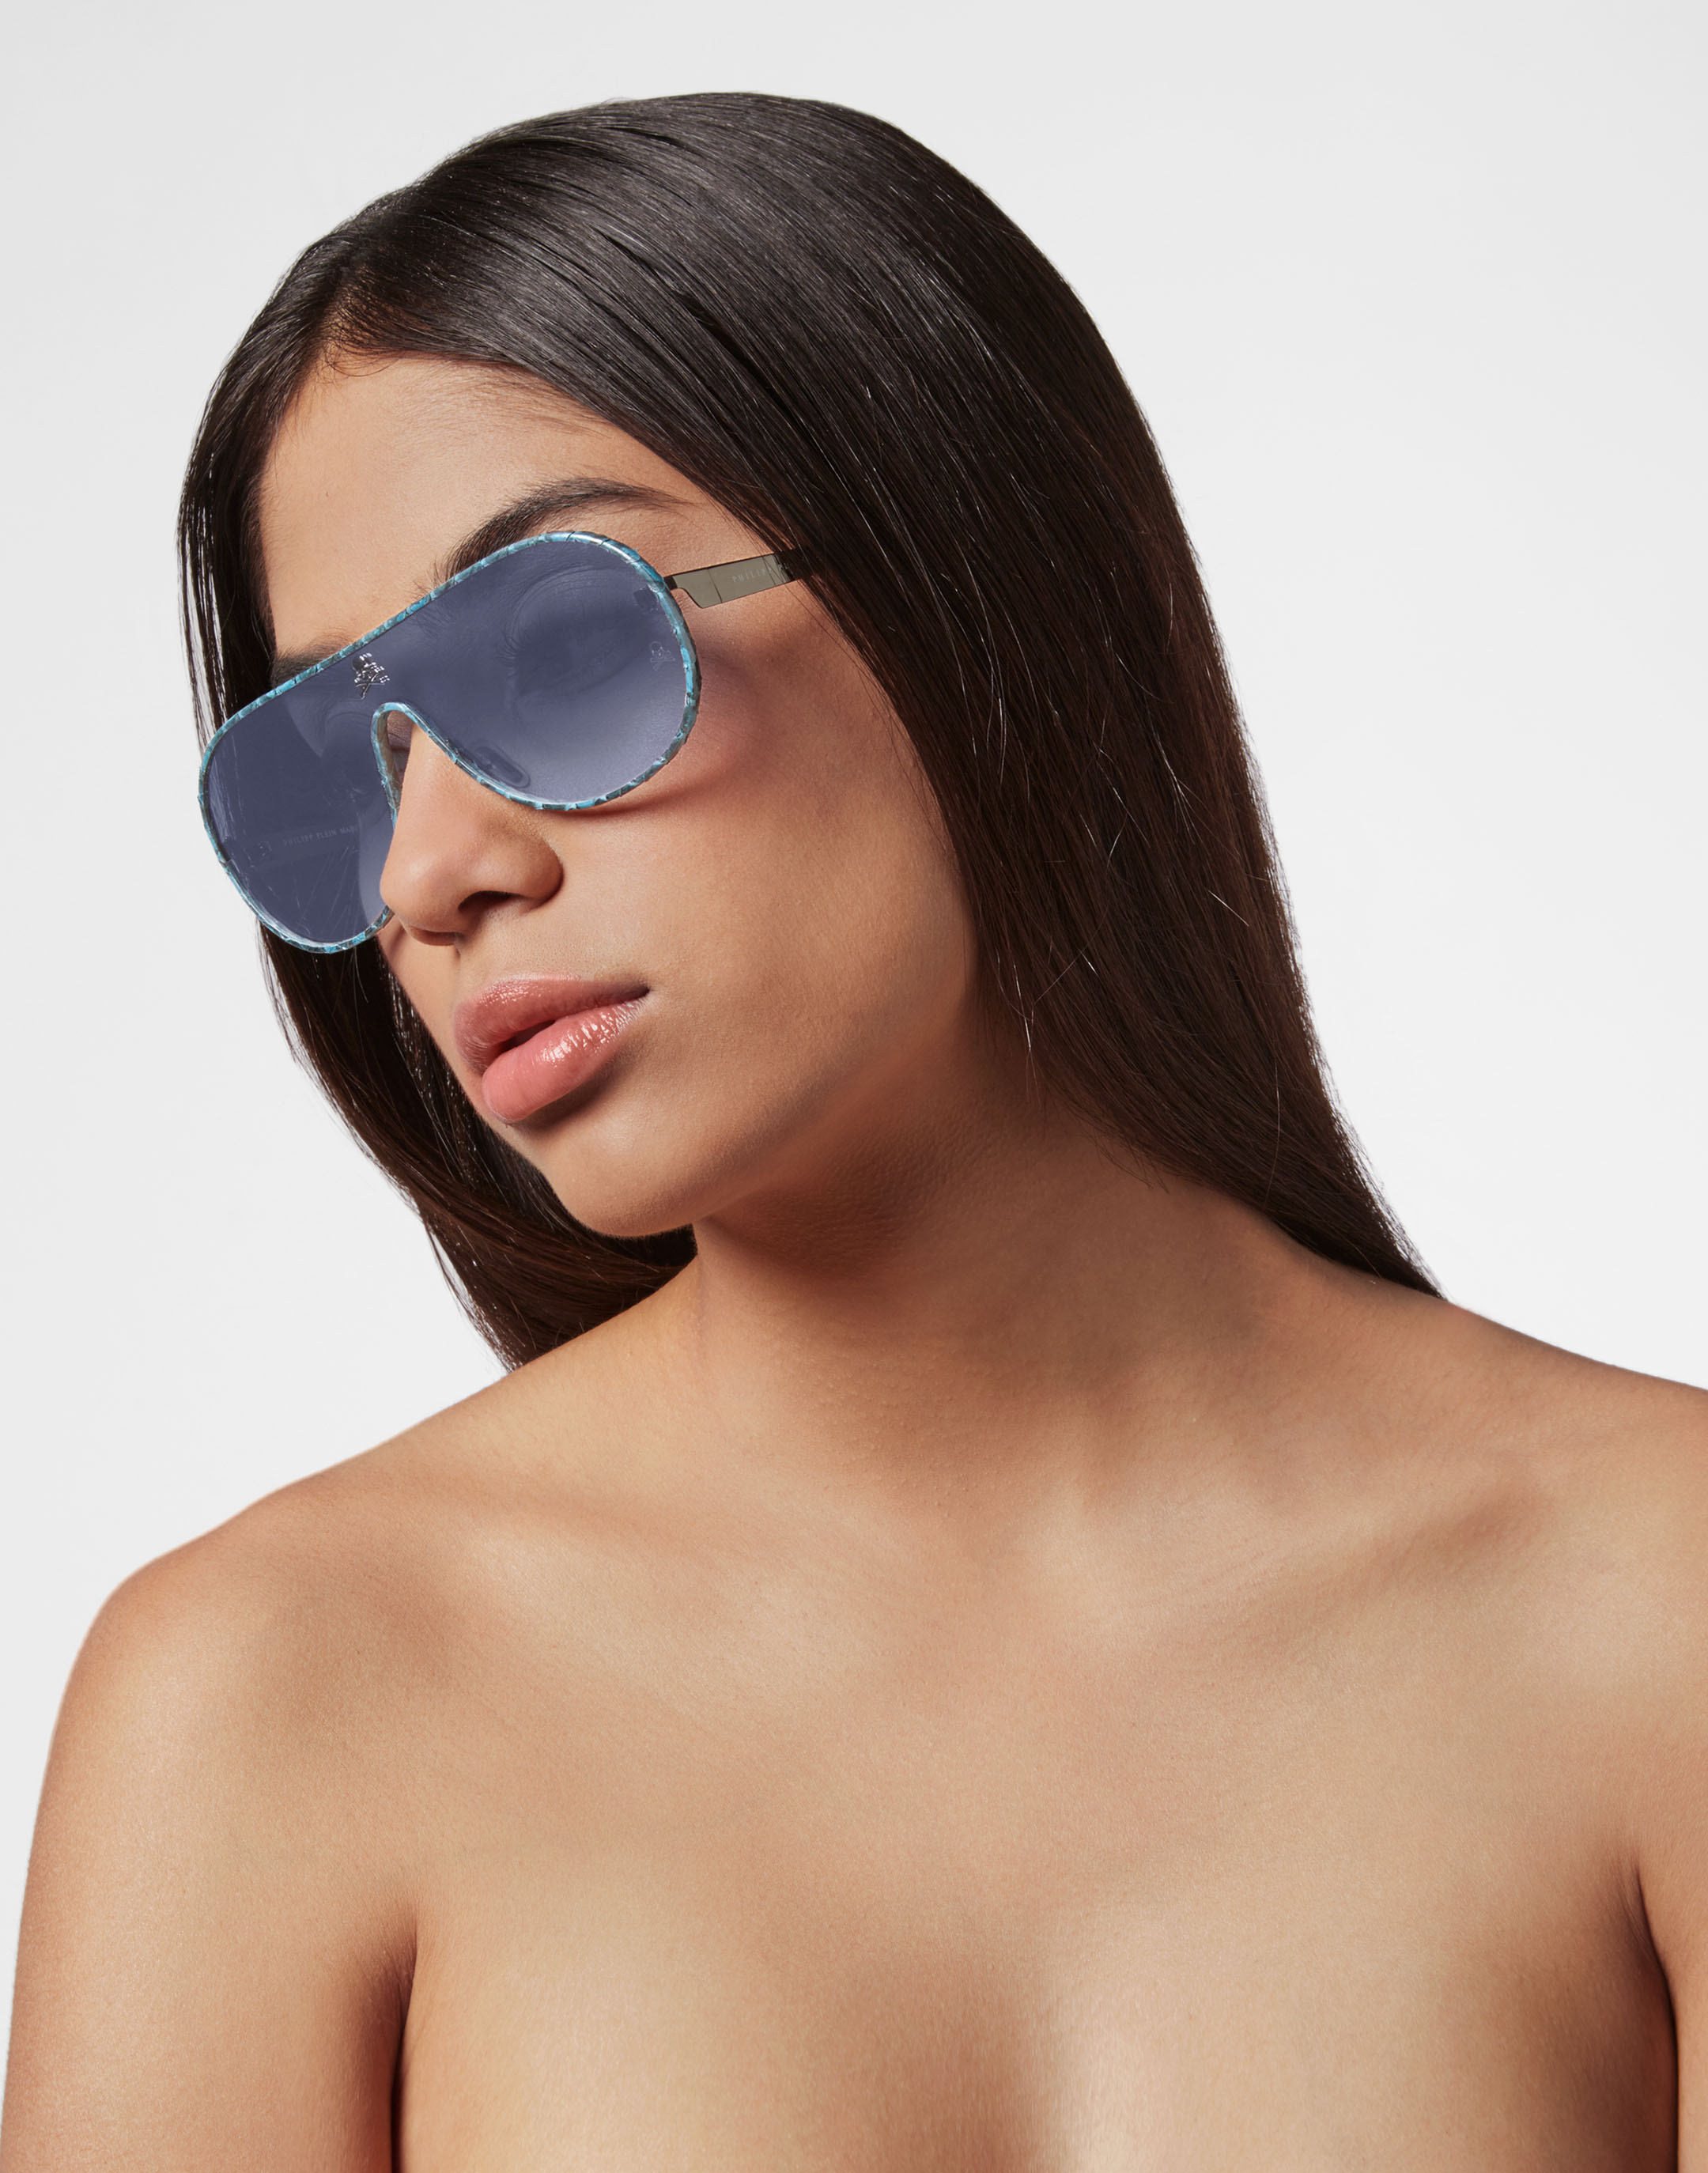 One Pair Retro Round Steampunk Polarized Sunglasses with Leather Side Shield  Vintage Eyewear for Men Women | SHEIN